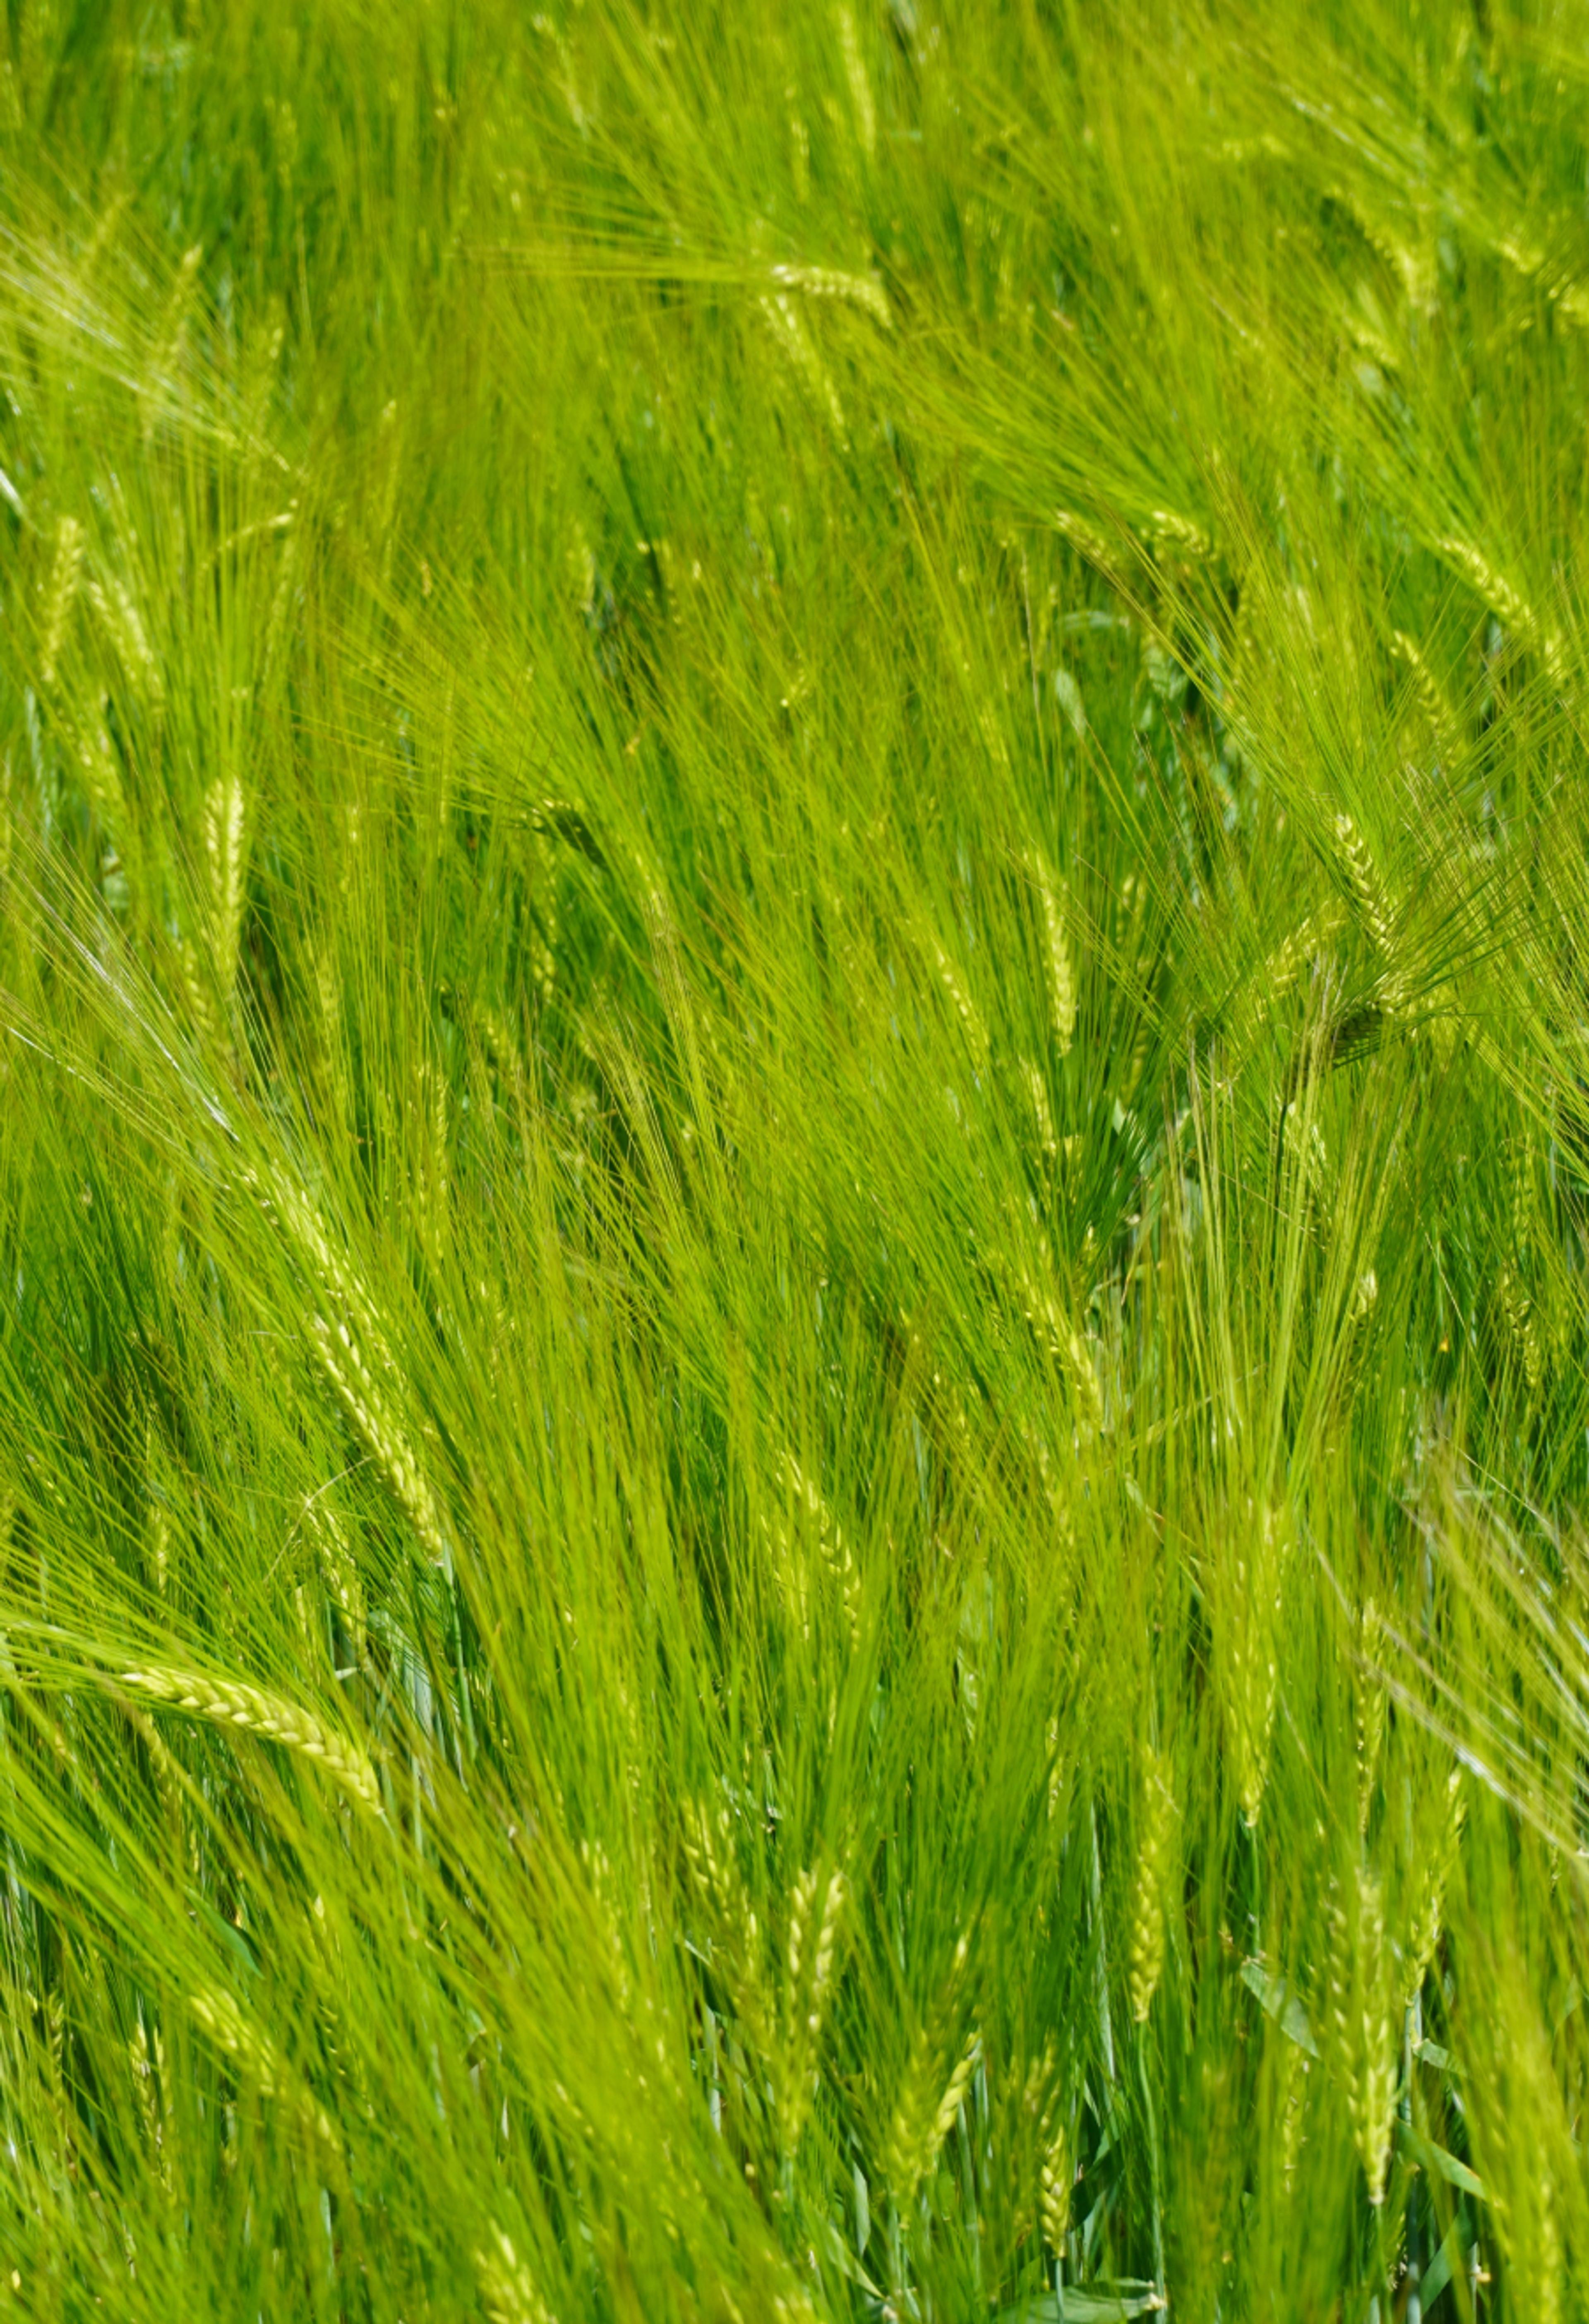 Green grains growing.